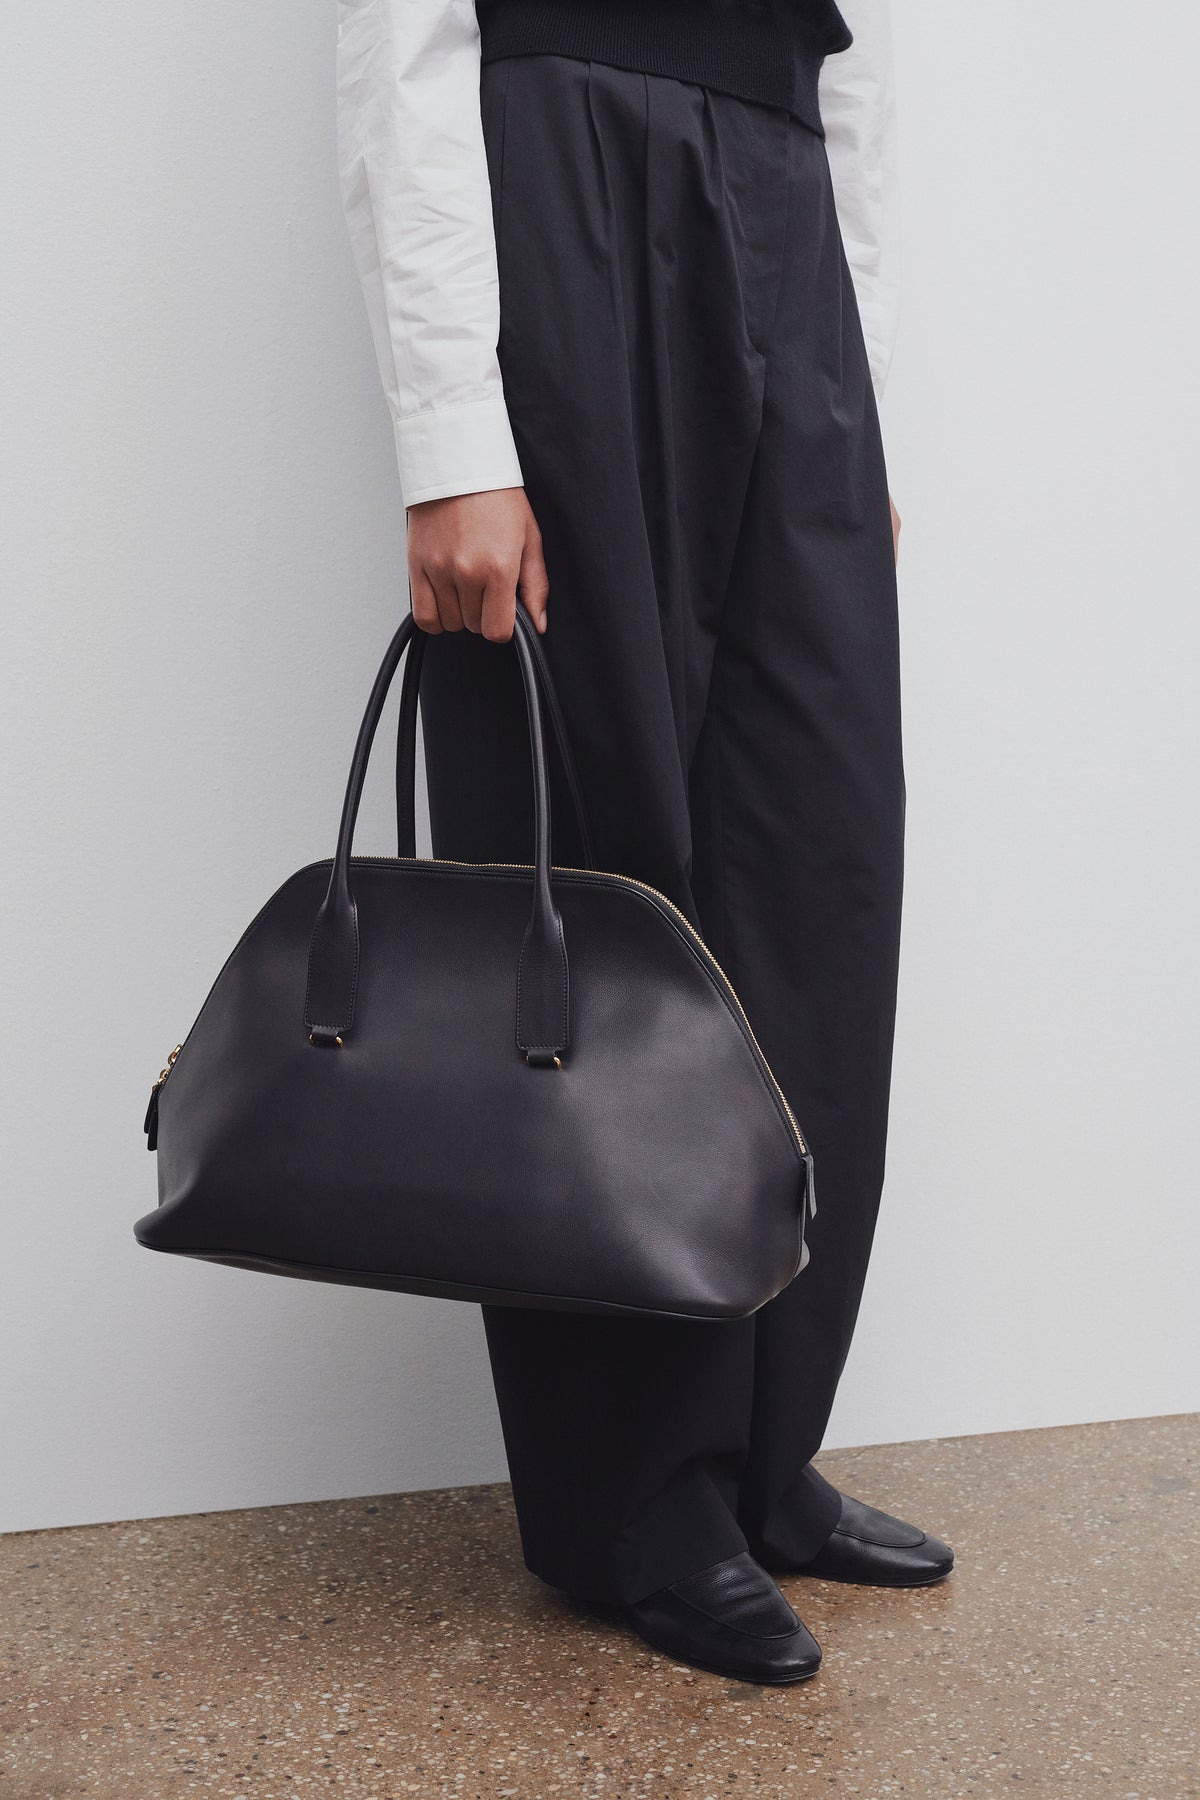 Devon Bag in Leather